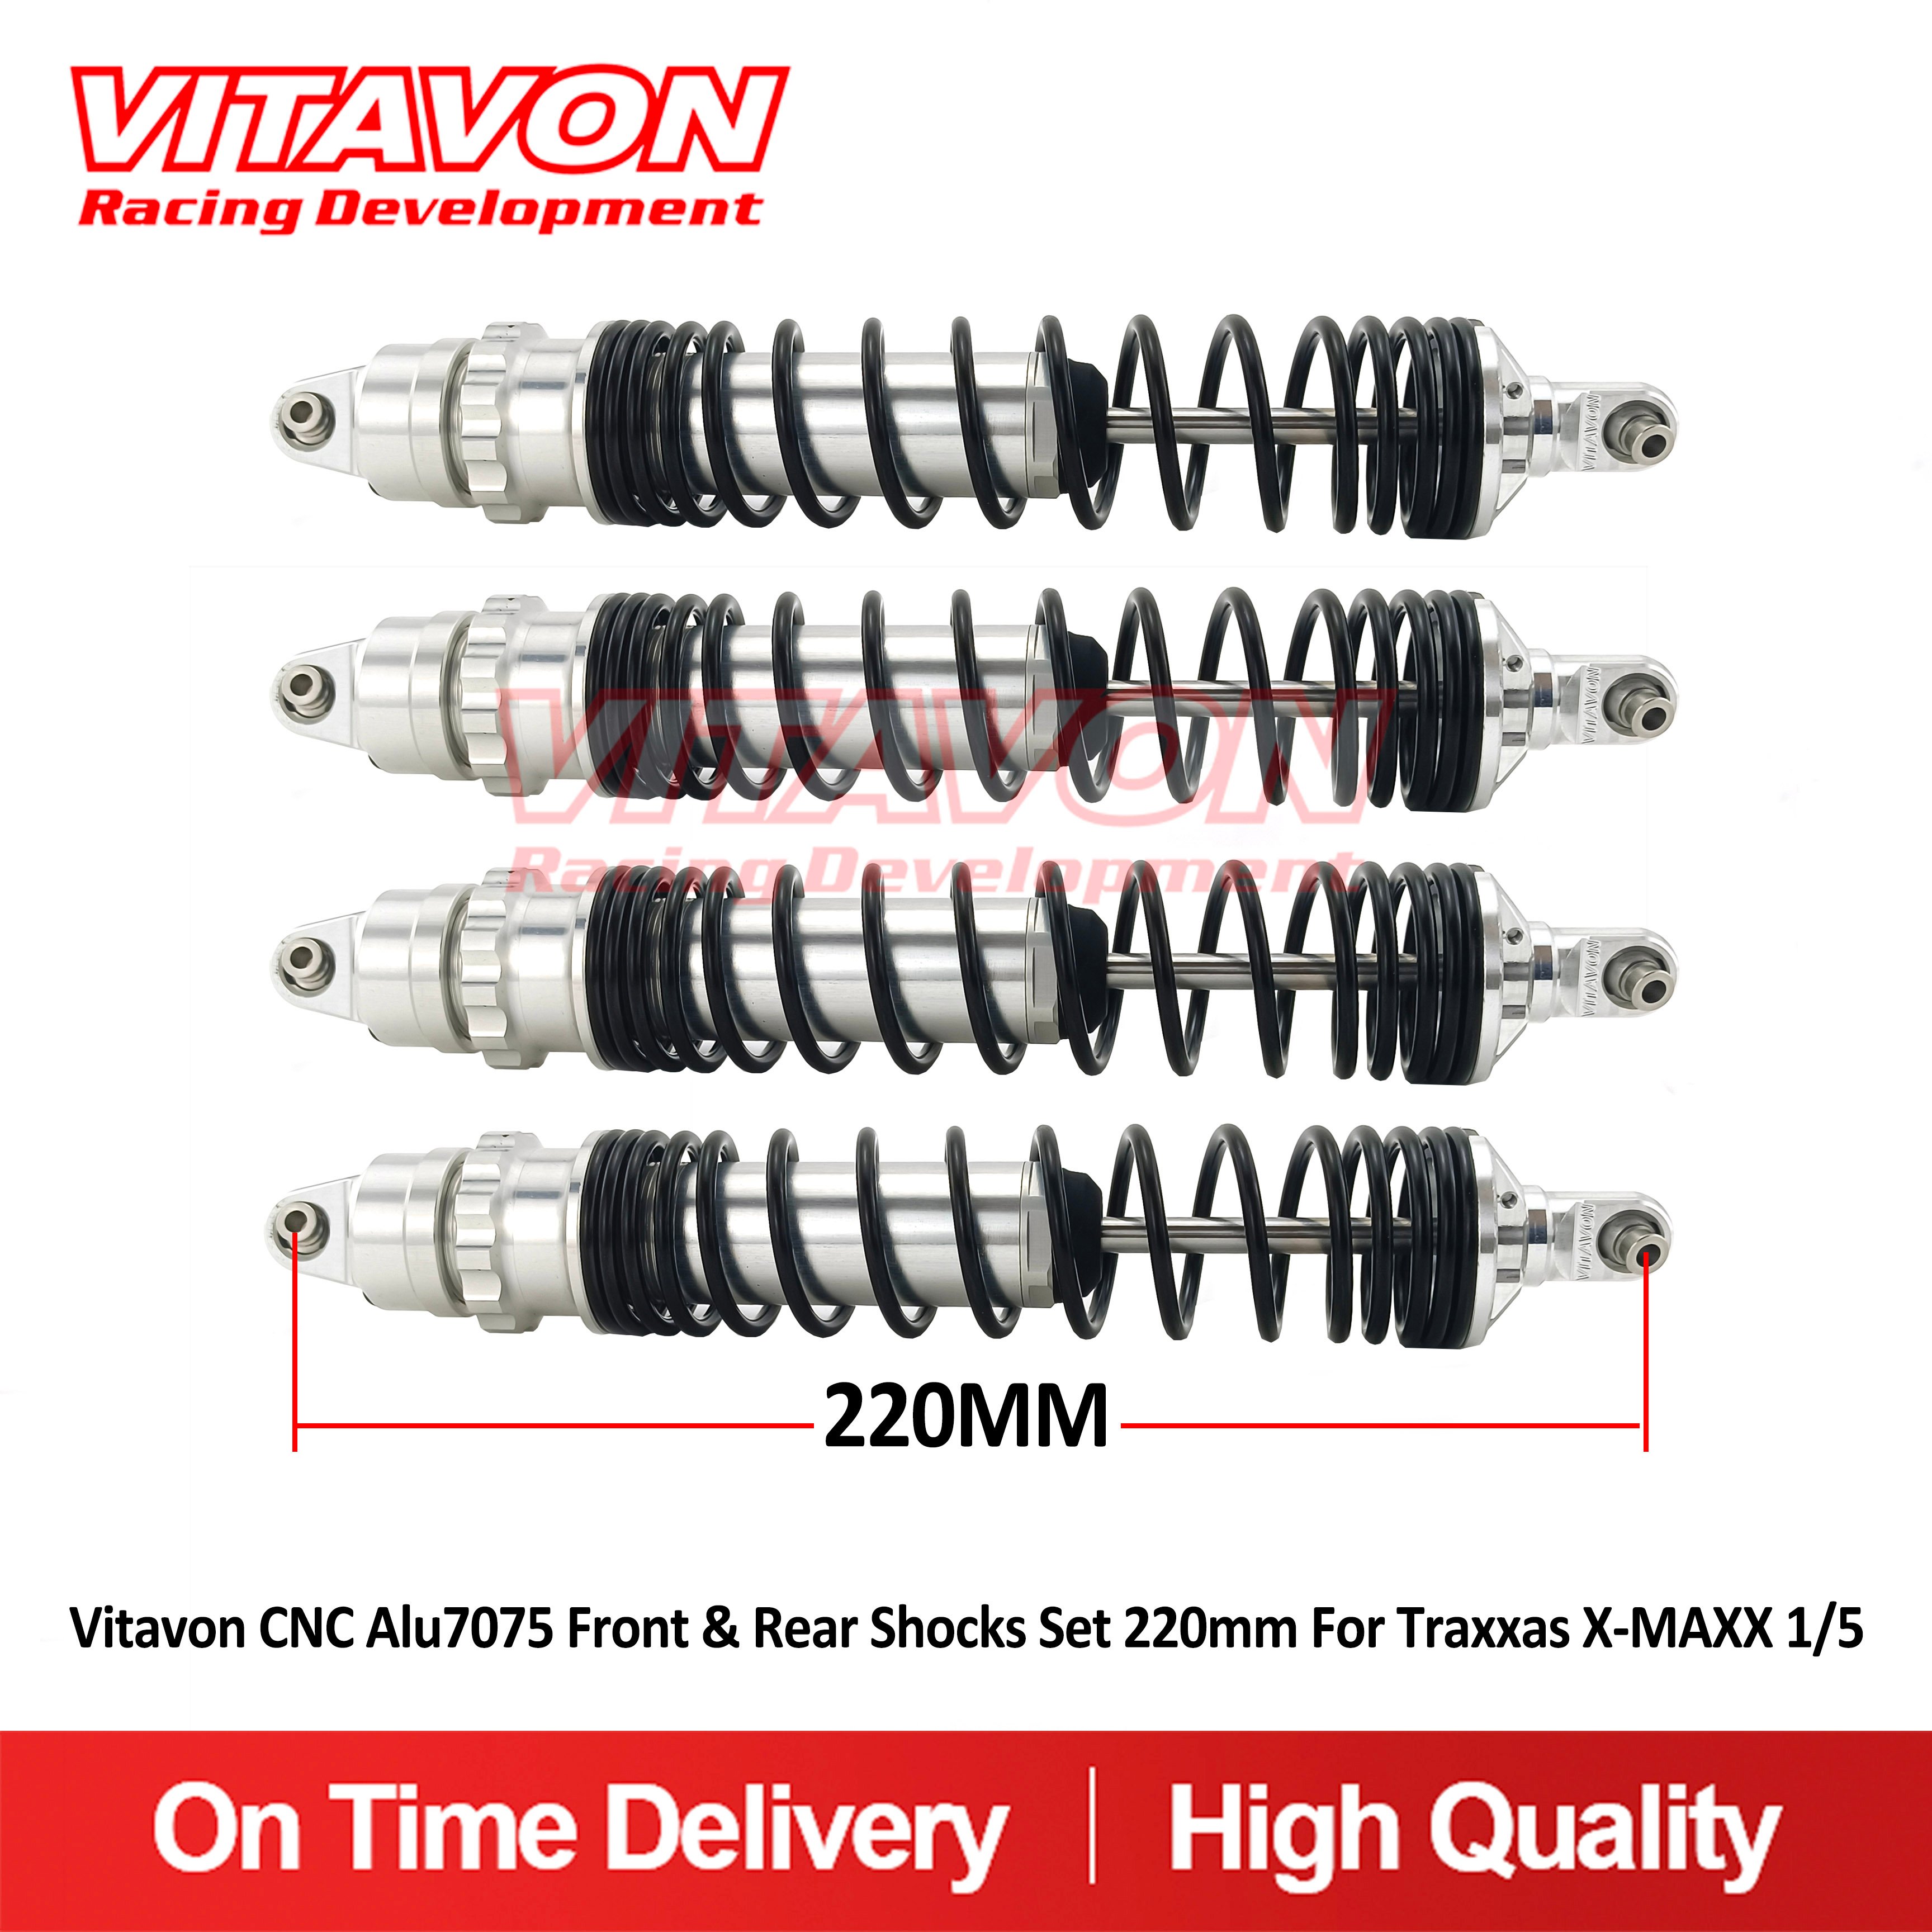 VITAVON CNC Alu7075 Front & Rear Shocks Set 220mm For Traxxas X-MAXX 1/5